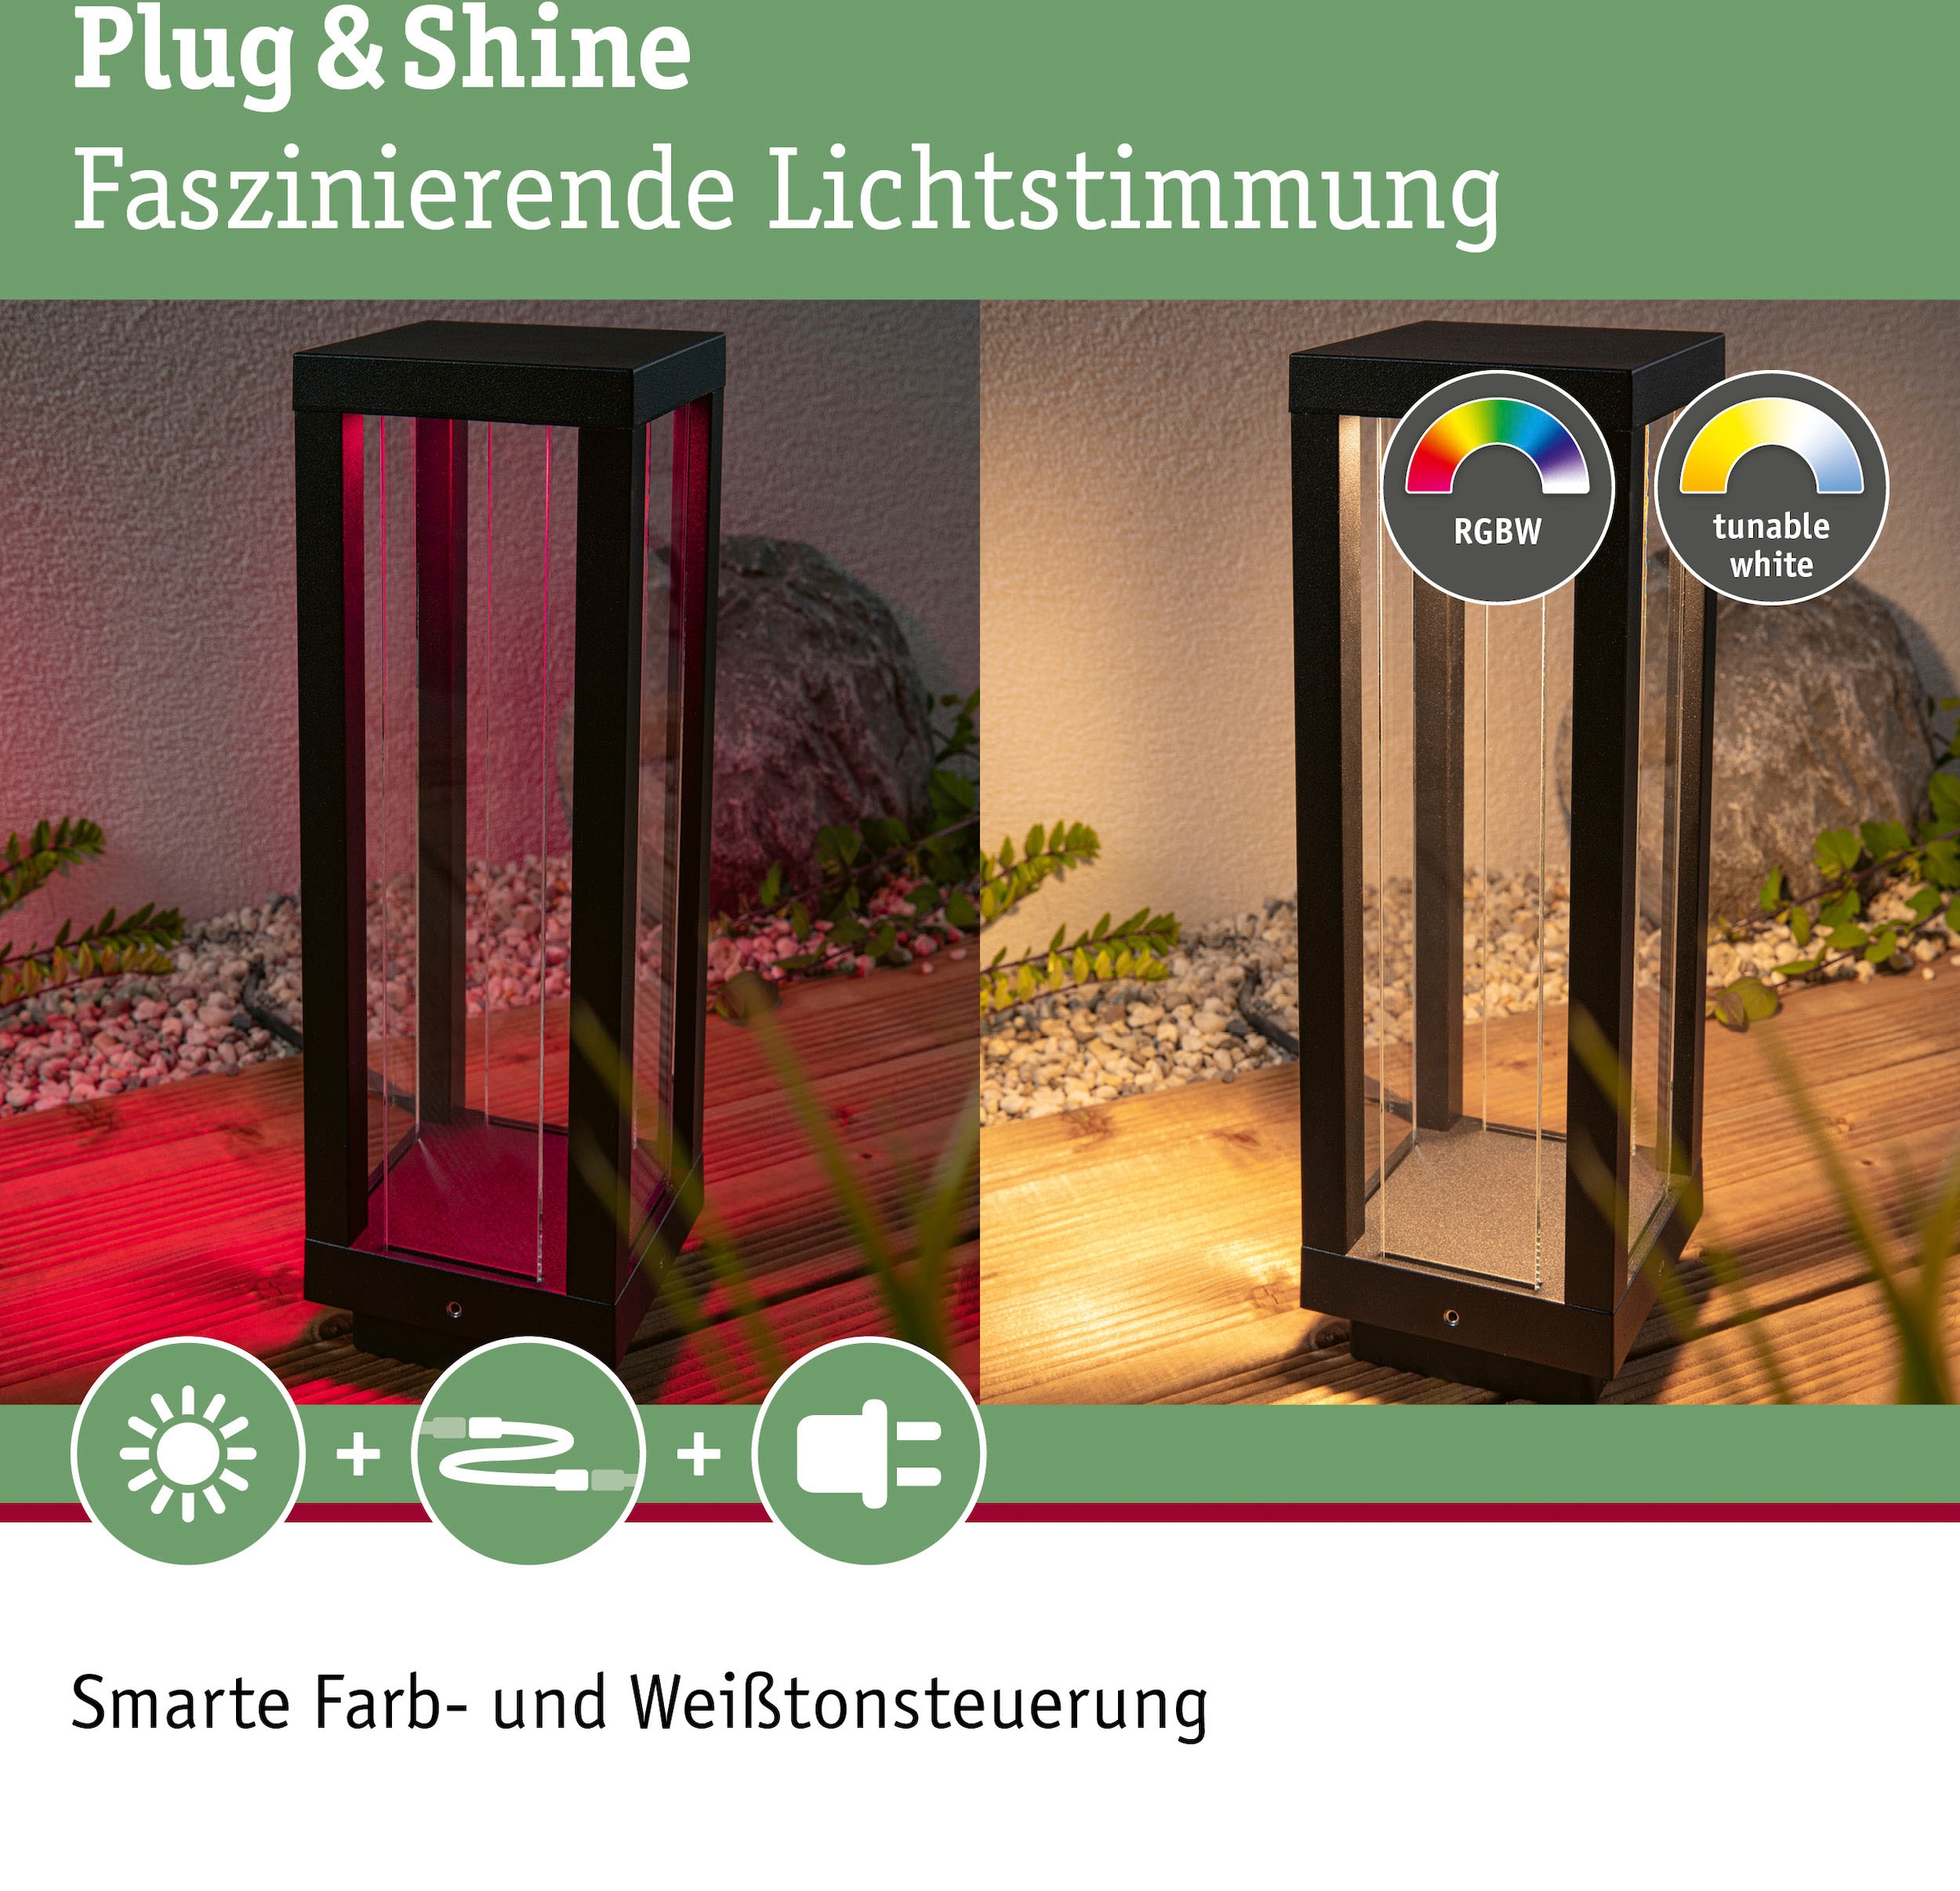 Paulmann LED Gartenleuchte »Outdoor Plug & Shine Classic Lantern 30 ZigBee IP44 RGBW«, 1 flammig-flammig, ZigBee IP44 RGBW